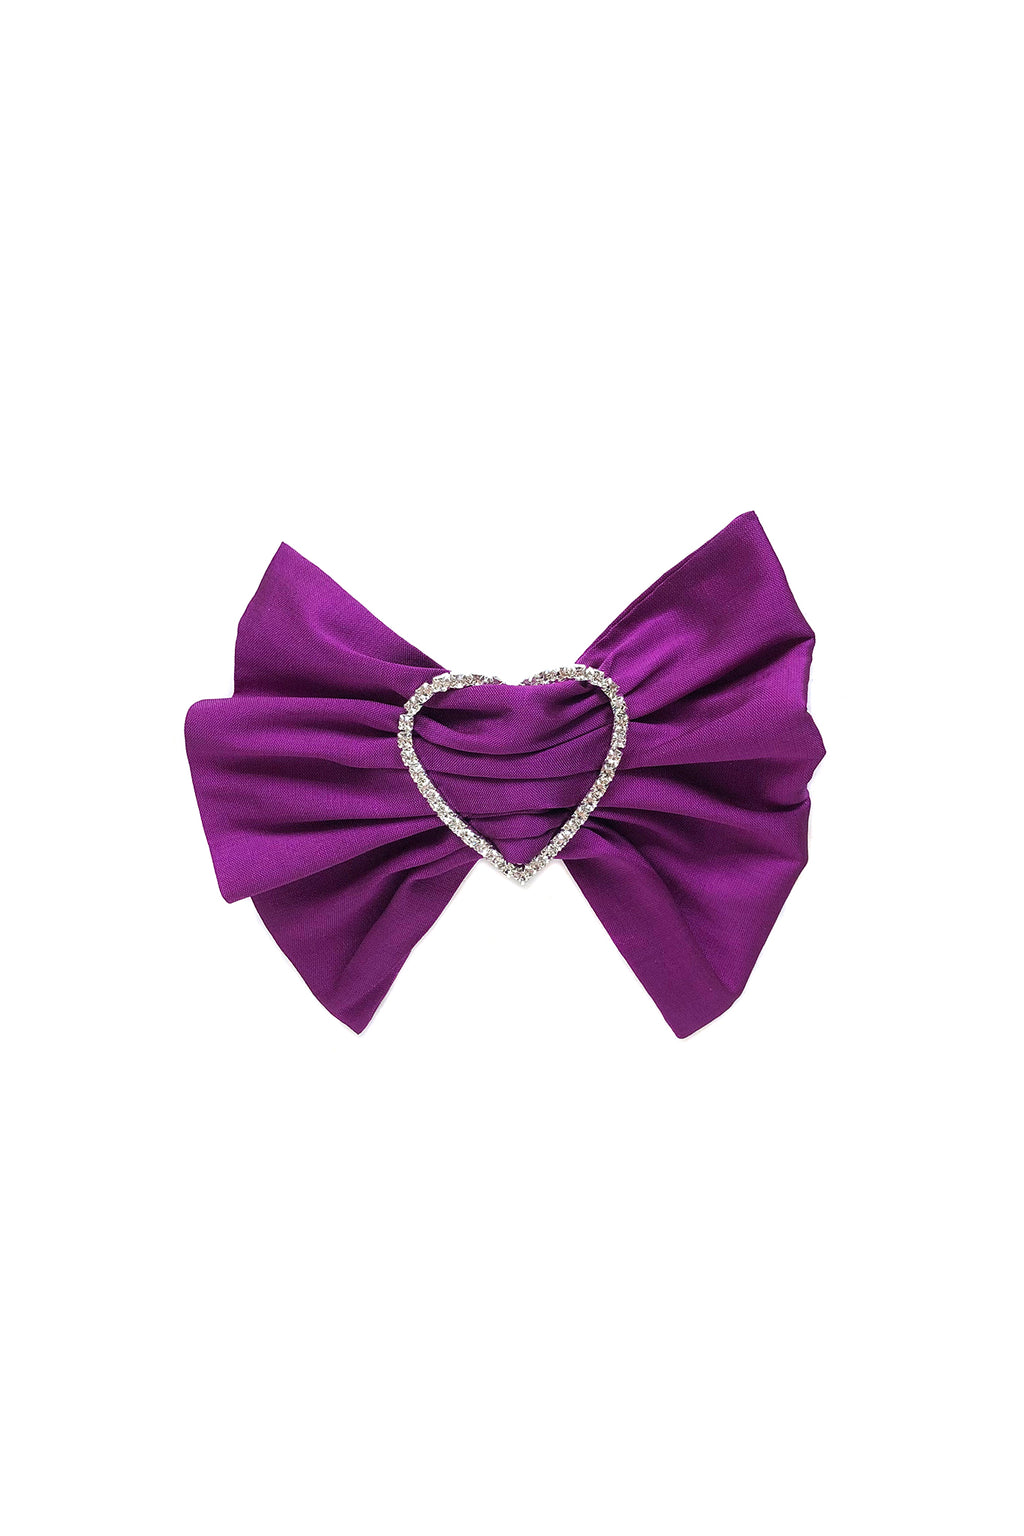 Merrfer Hair Bow, Purple